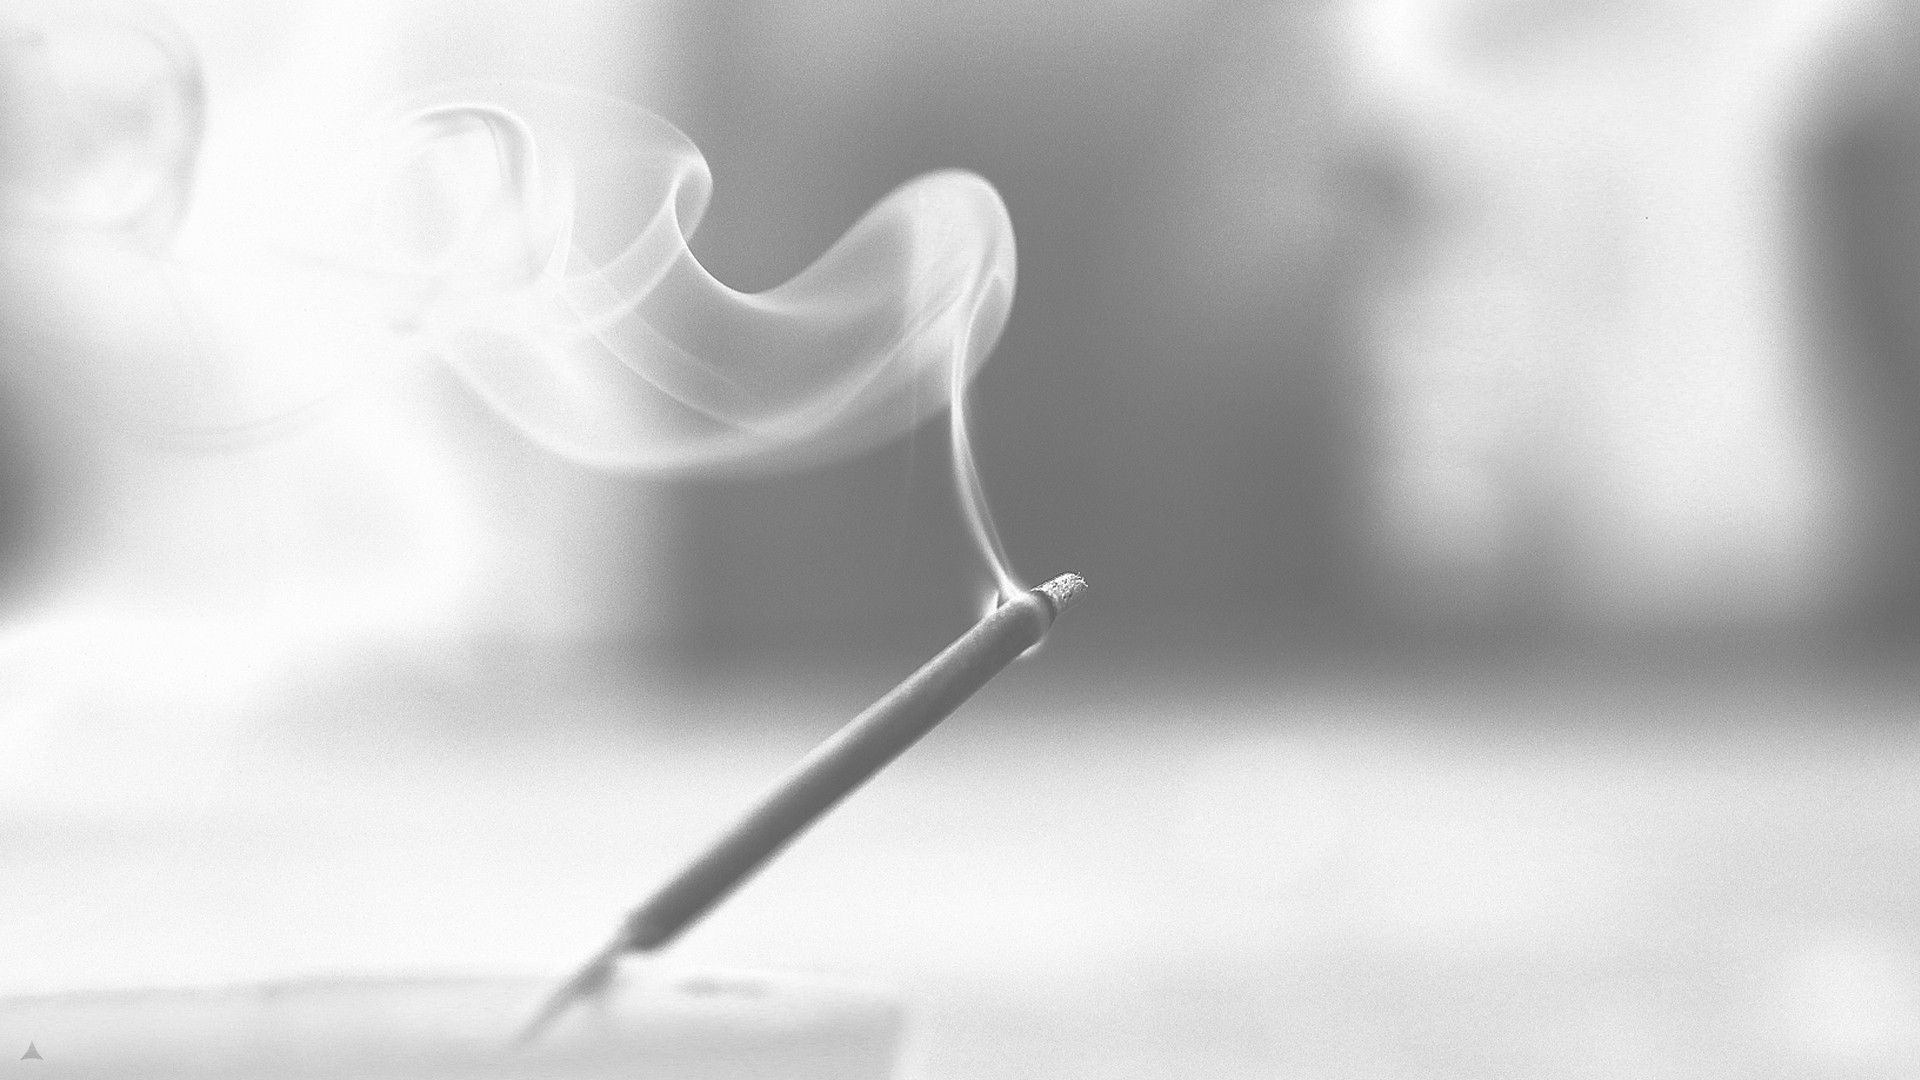 incense